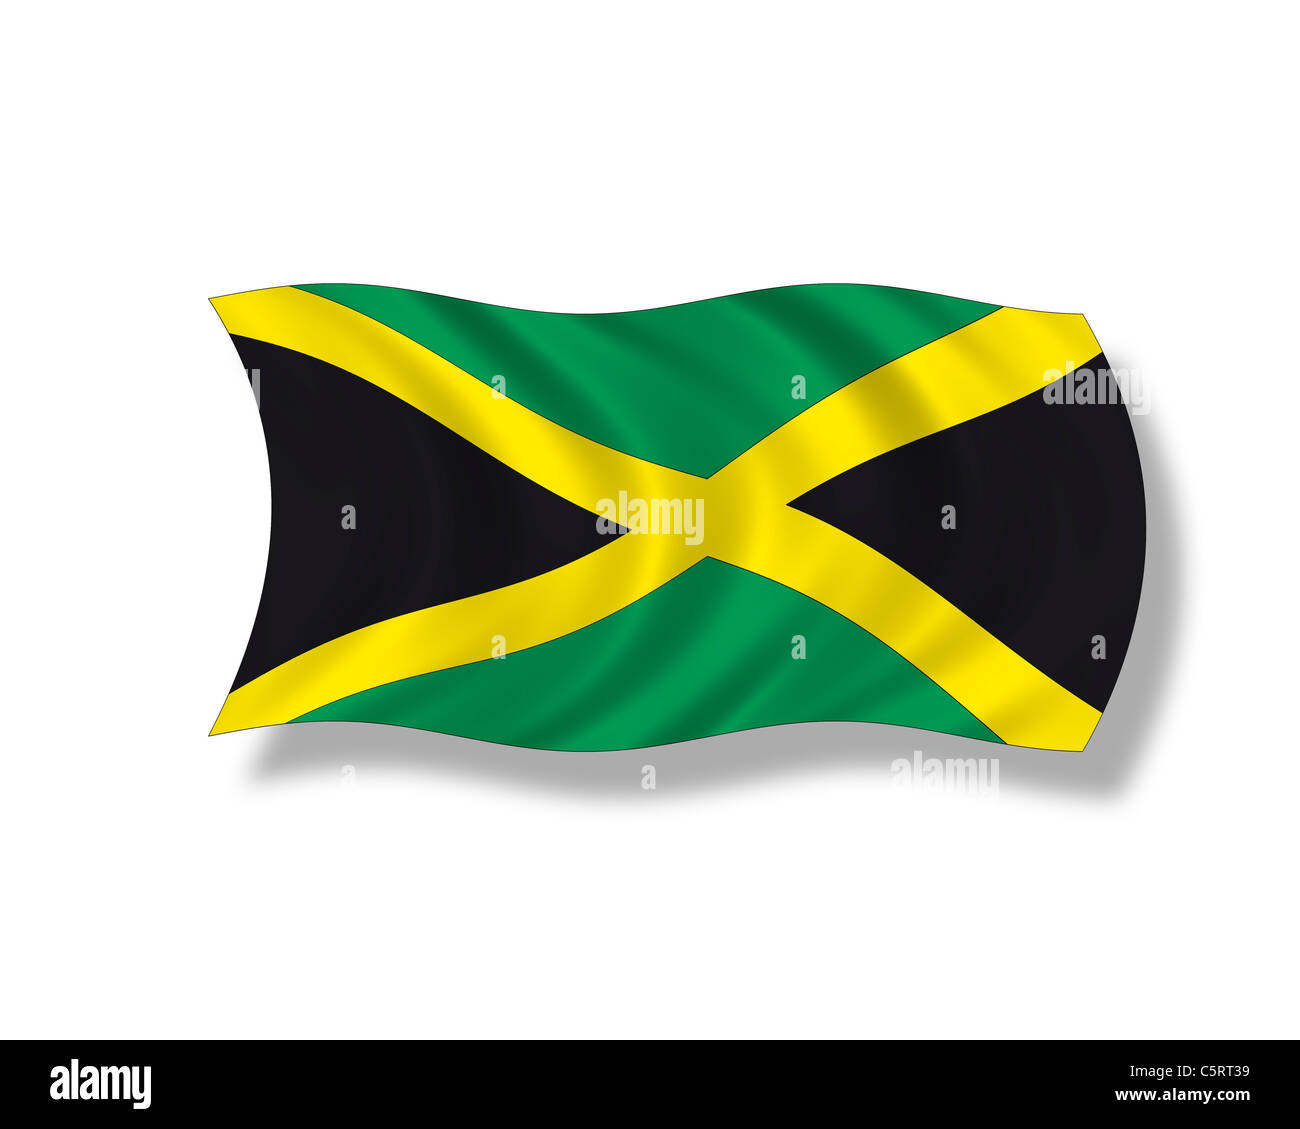 Illustration, Flag of Jamaica Stock Photo